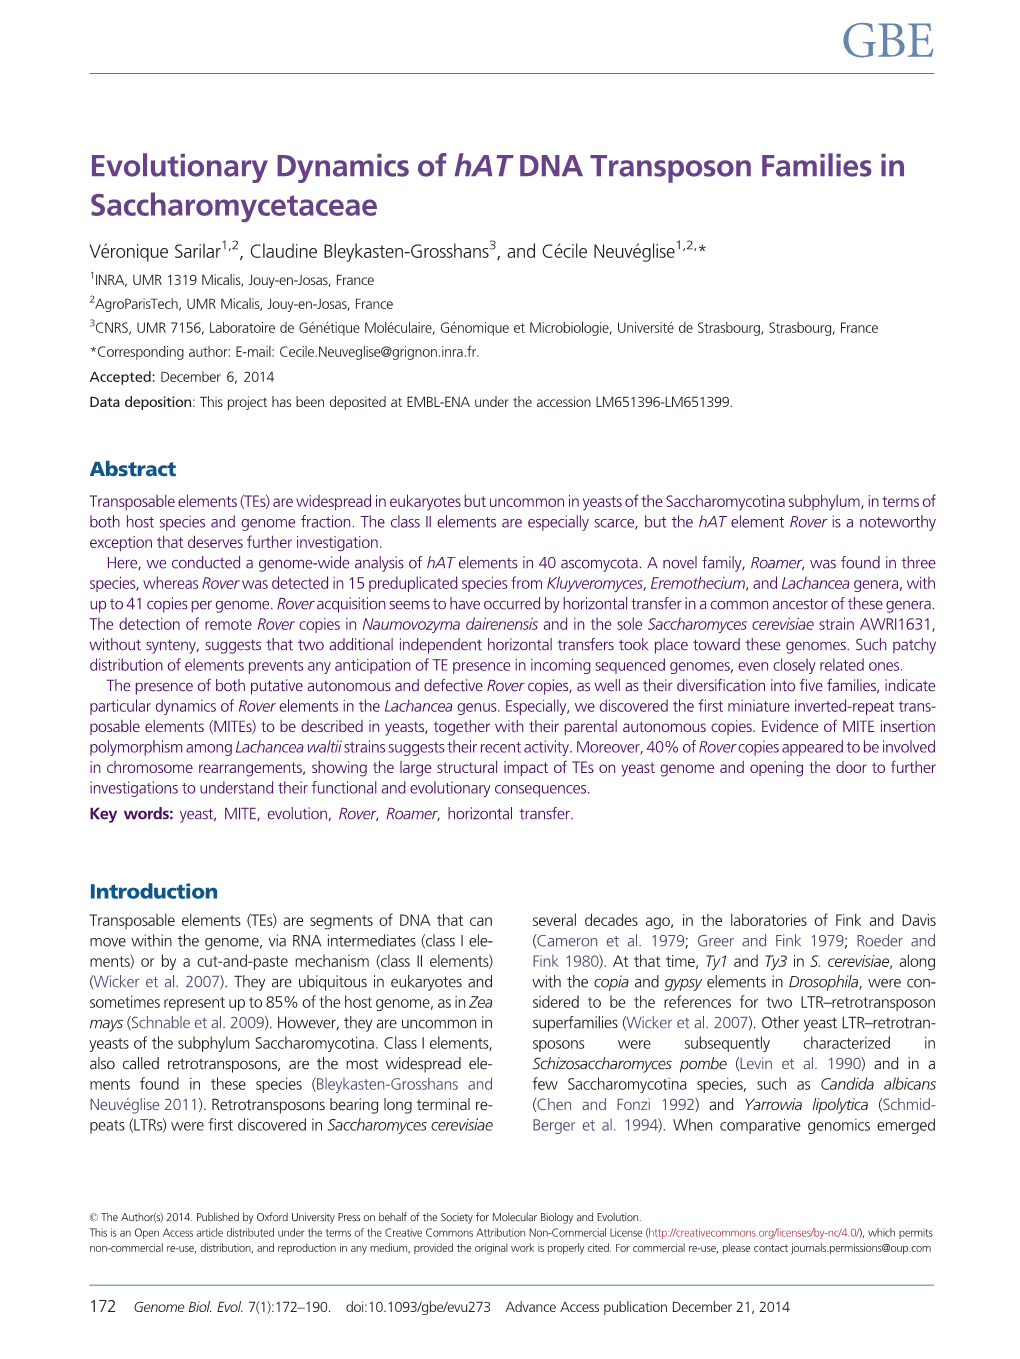 Evolutionary Dynamics of Hat DNA Transposon Families in Saccharomycetaceae